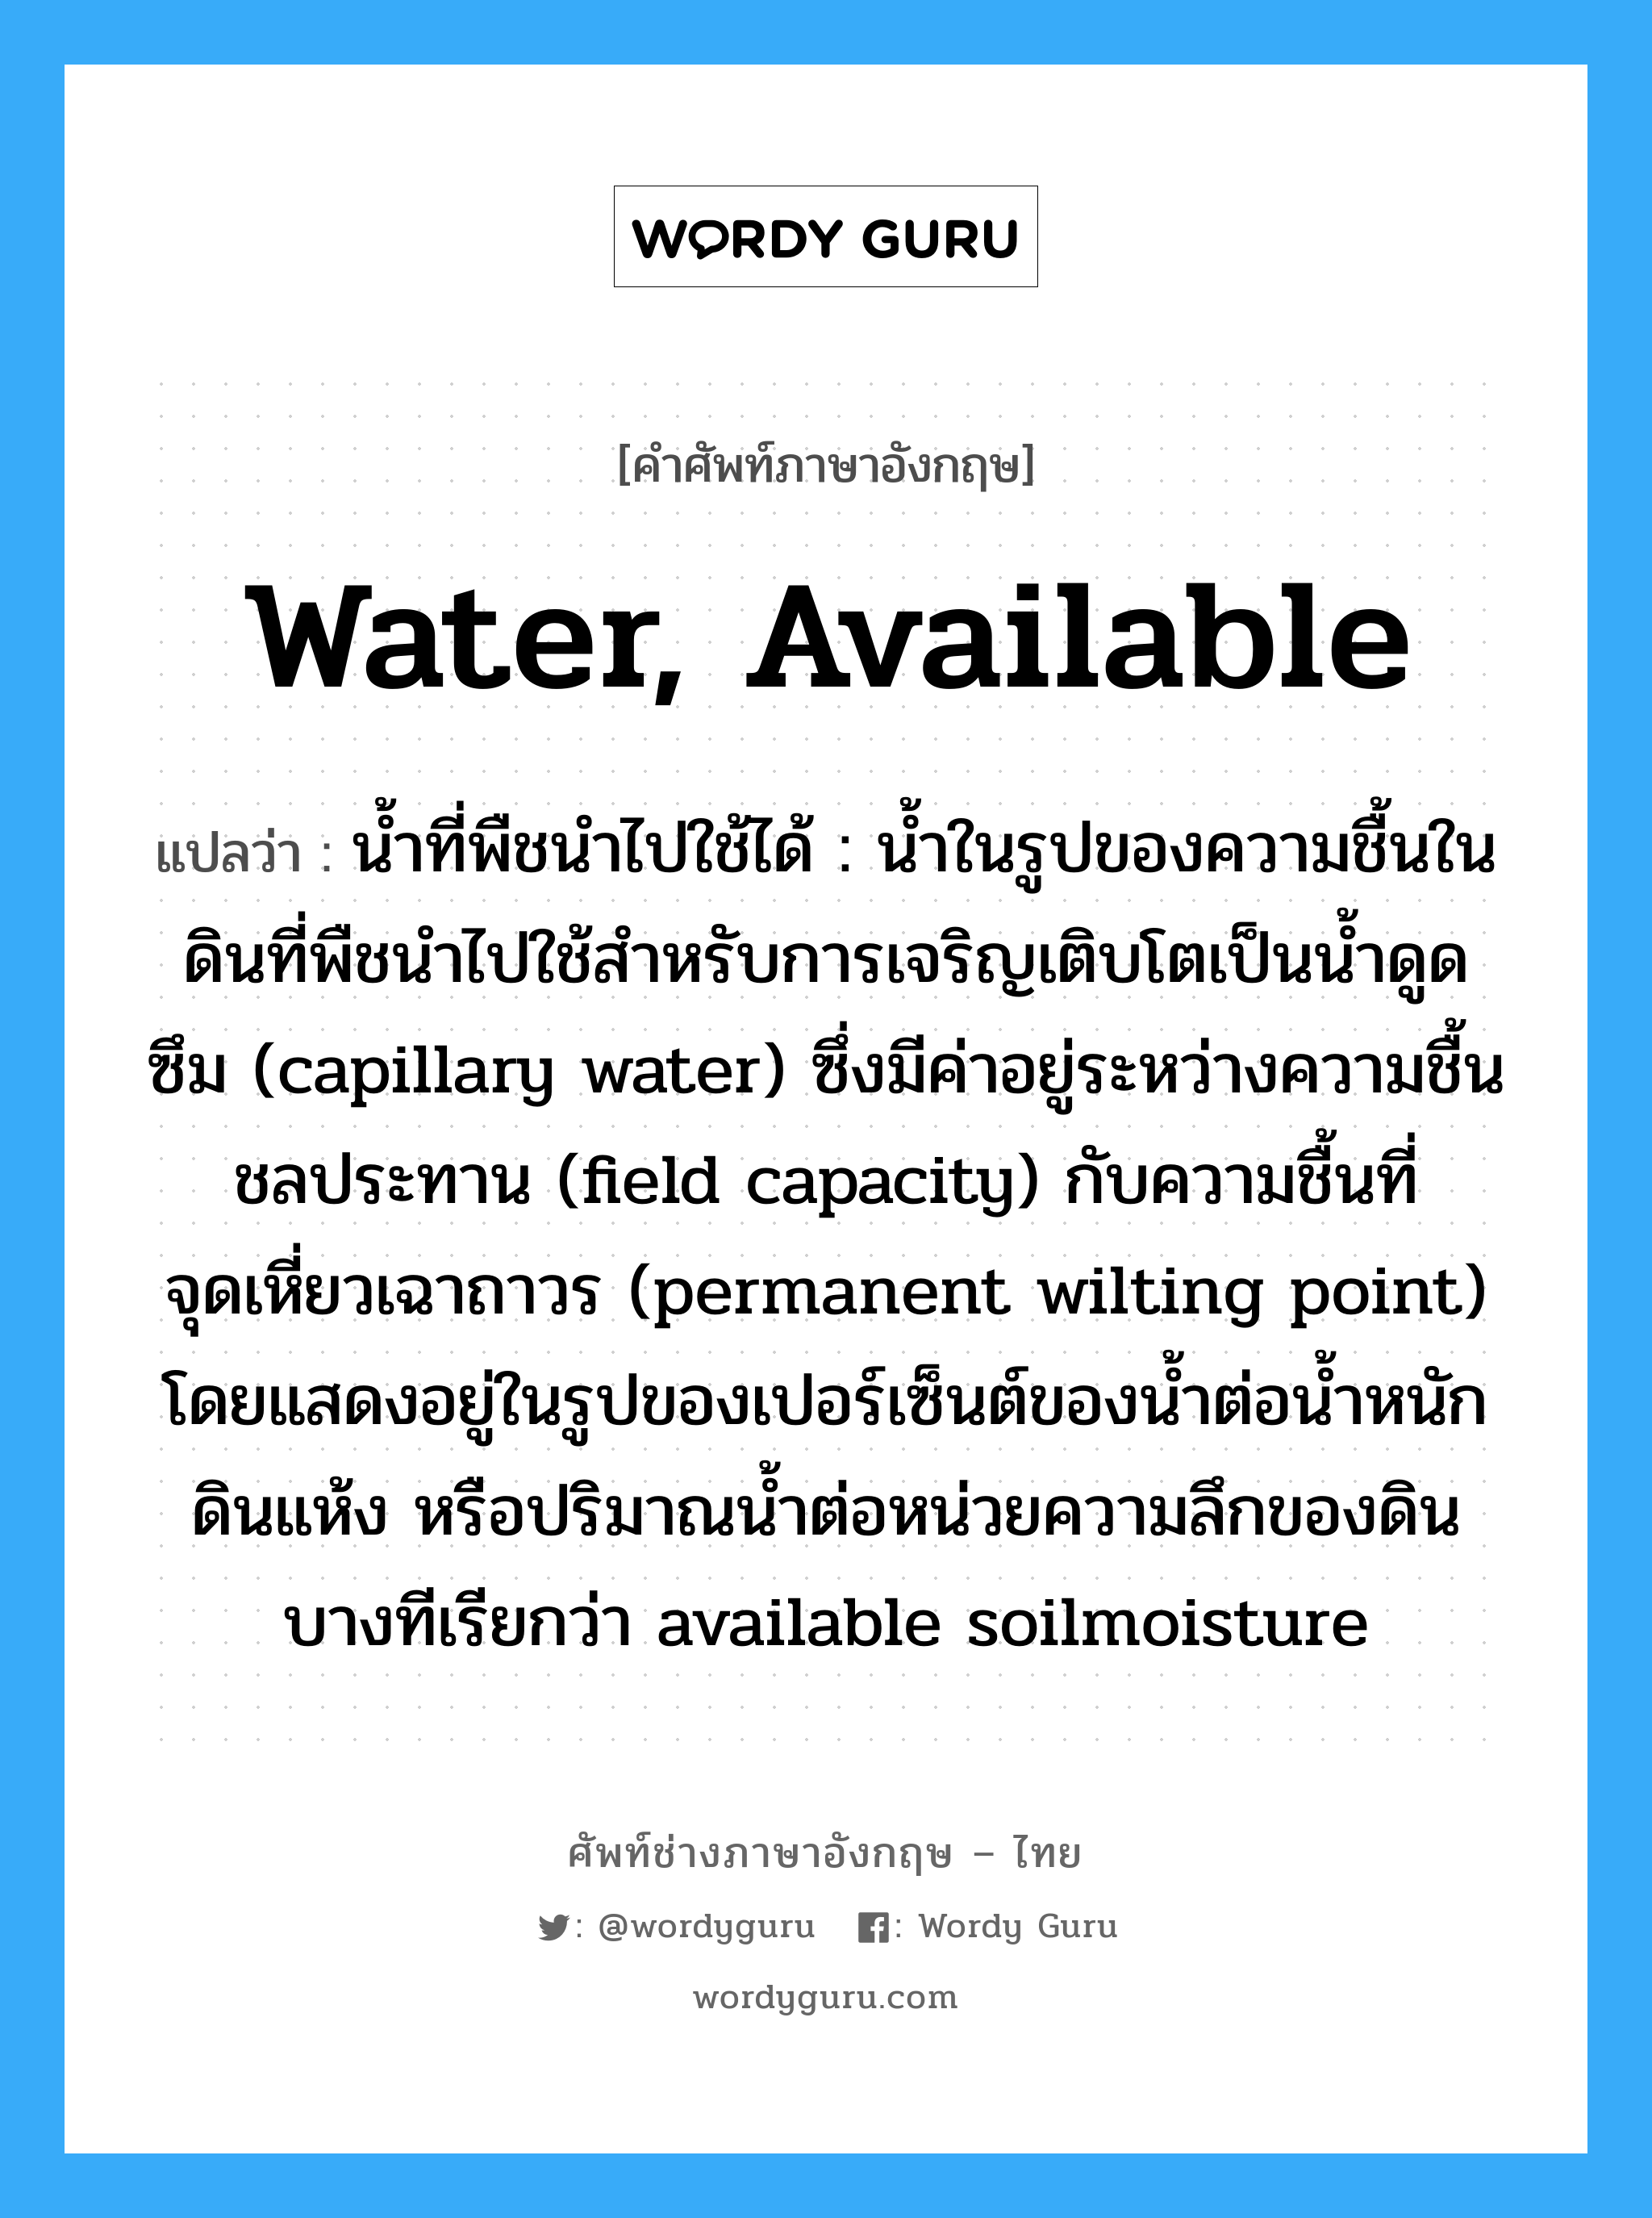 water, available แปลว่า?, คำศัพท์ช่างภาษาอังกฤษ - ไทย water, available คำศัพท์ภาษาอังกฤษ water, available แปลว่า น้ำที่พืชนำไปใช้ได้ : น้ำในรูปของความชื้นในดินที่พืชนำไปใช้สำหรับการเจริญเติบโตเป็นน้ำดูดซึม (capillary water) ซึ่งมีค่าอยู่ระหว่างความชื้นชลประทาน (field capacity) กับความชื้นที่จุดเหี่ยวเฉาถาวร (permanent wilting point) โดยแสดงอยู่ในรูปของเปอร์เซ็นต์ของน้ำต่อน้ำหนักดินแห้ง หรือปริมาณน้ำต่อหน่วยความลึกของดิน บางทีเรียกว่า available soilmoisture